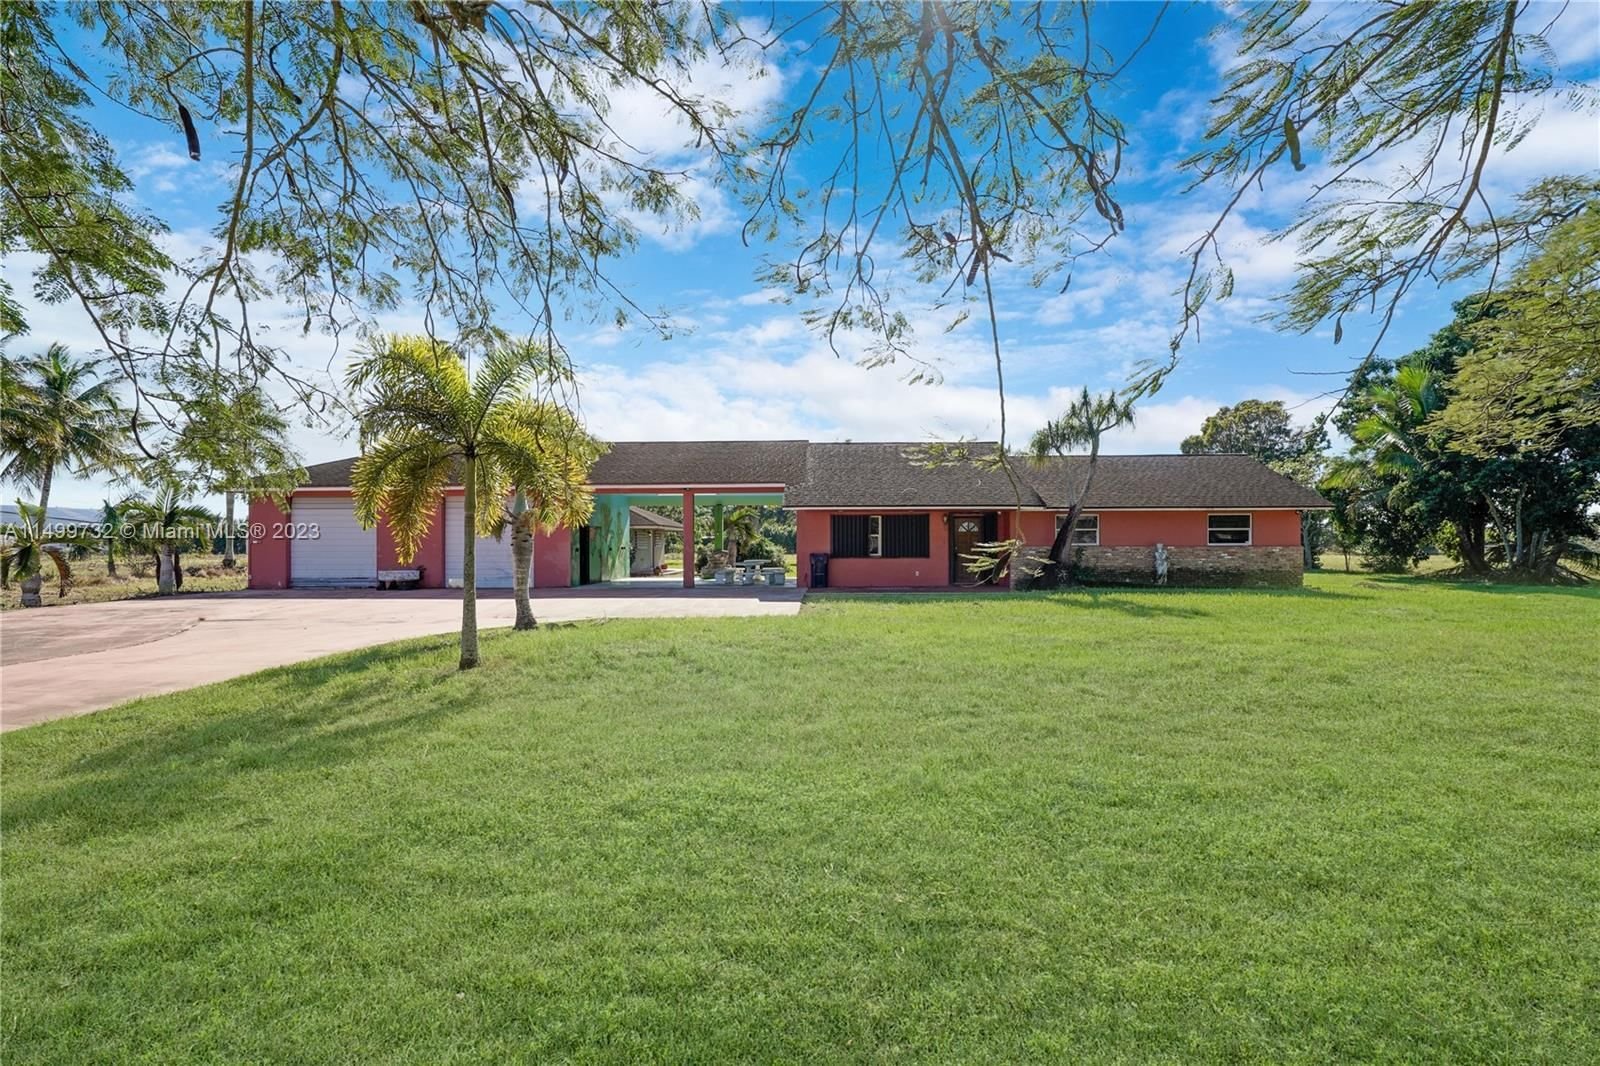 Real estate property located at 20000 216th St, Miami-Dade County, Redland, Miami, FL